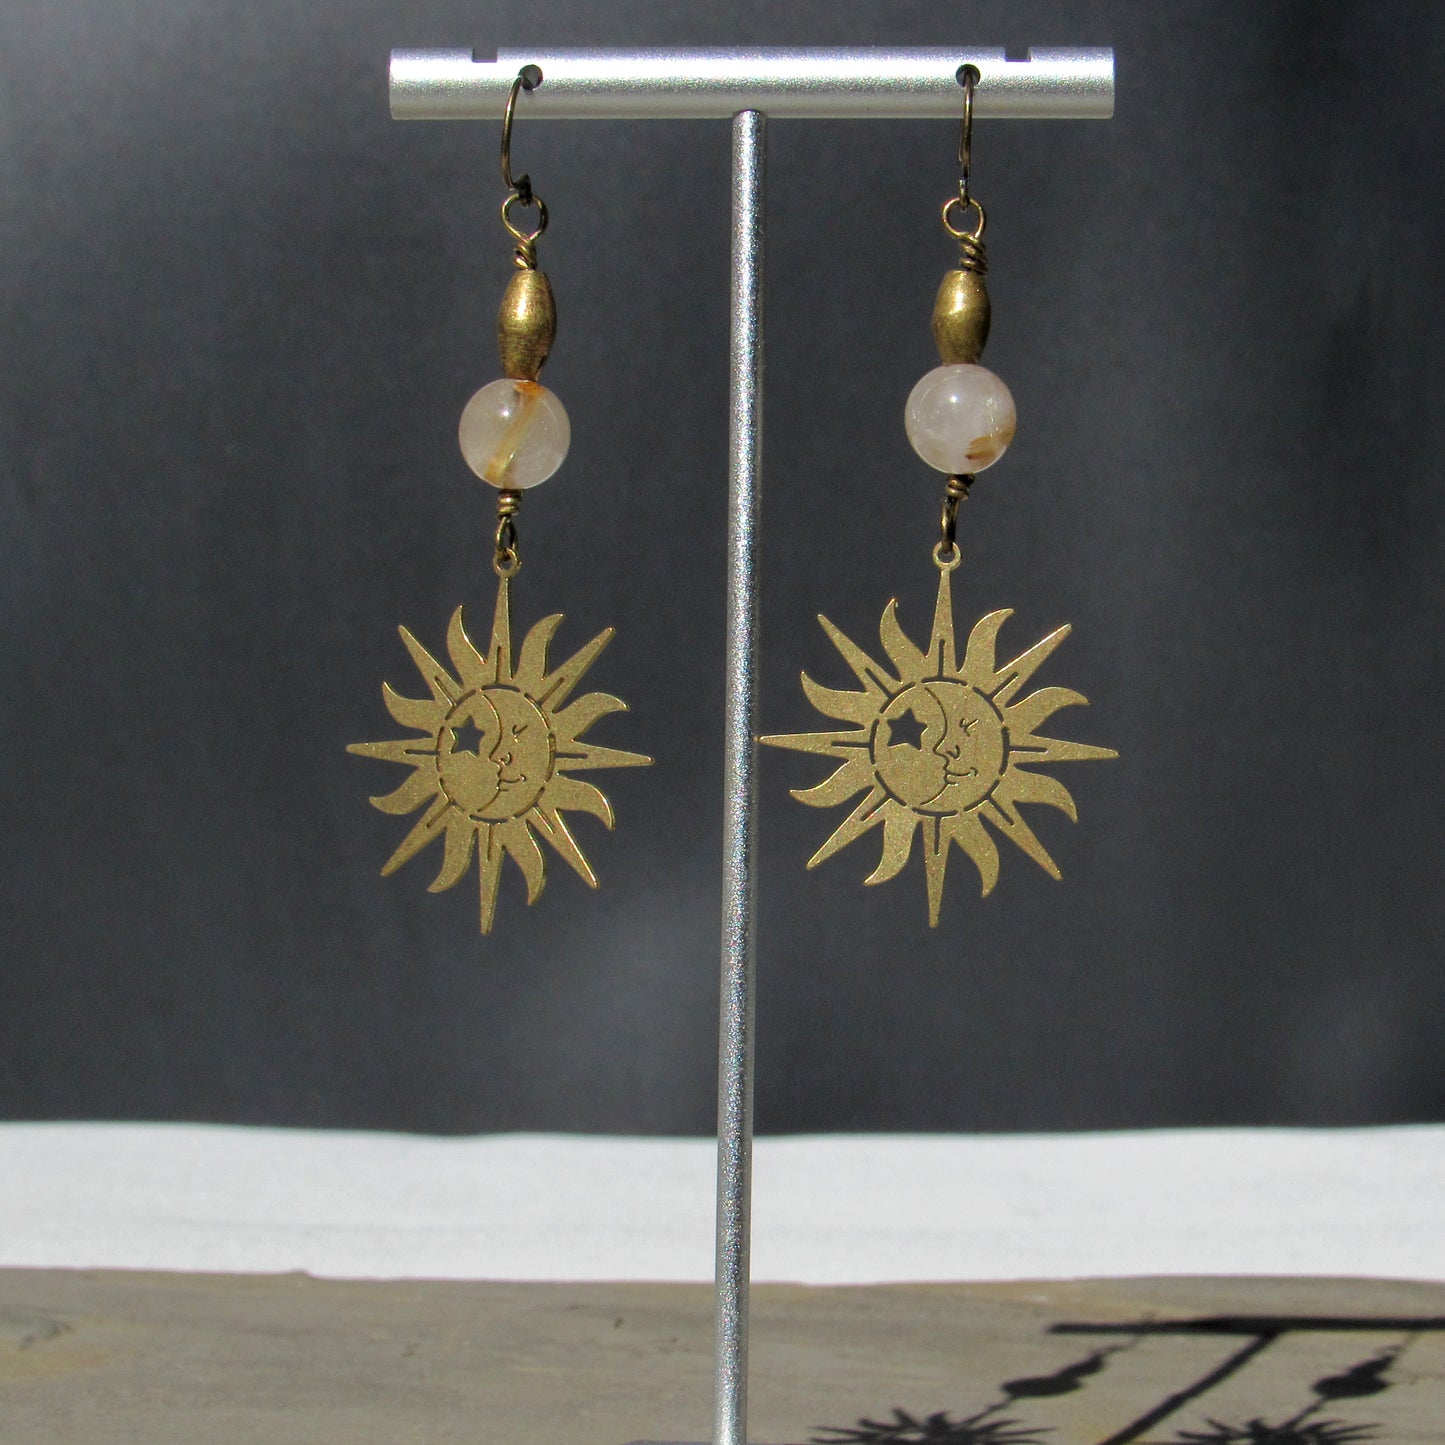 Rutile Quartz and Brass Moon and Sun earrings